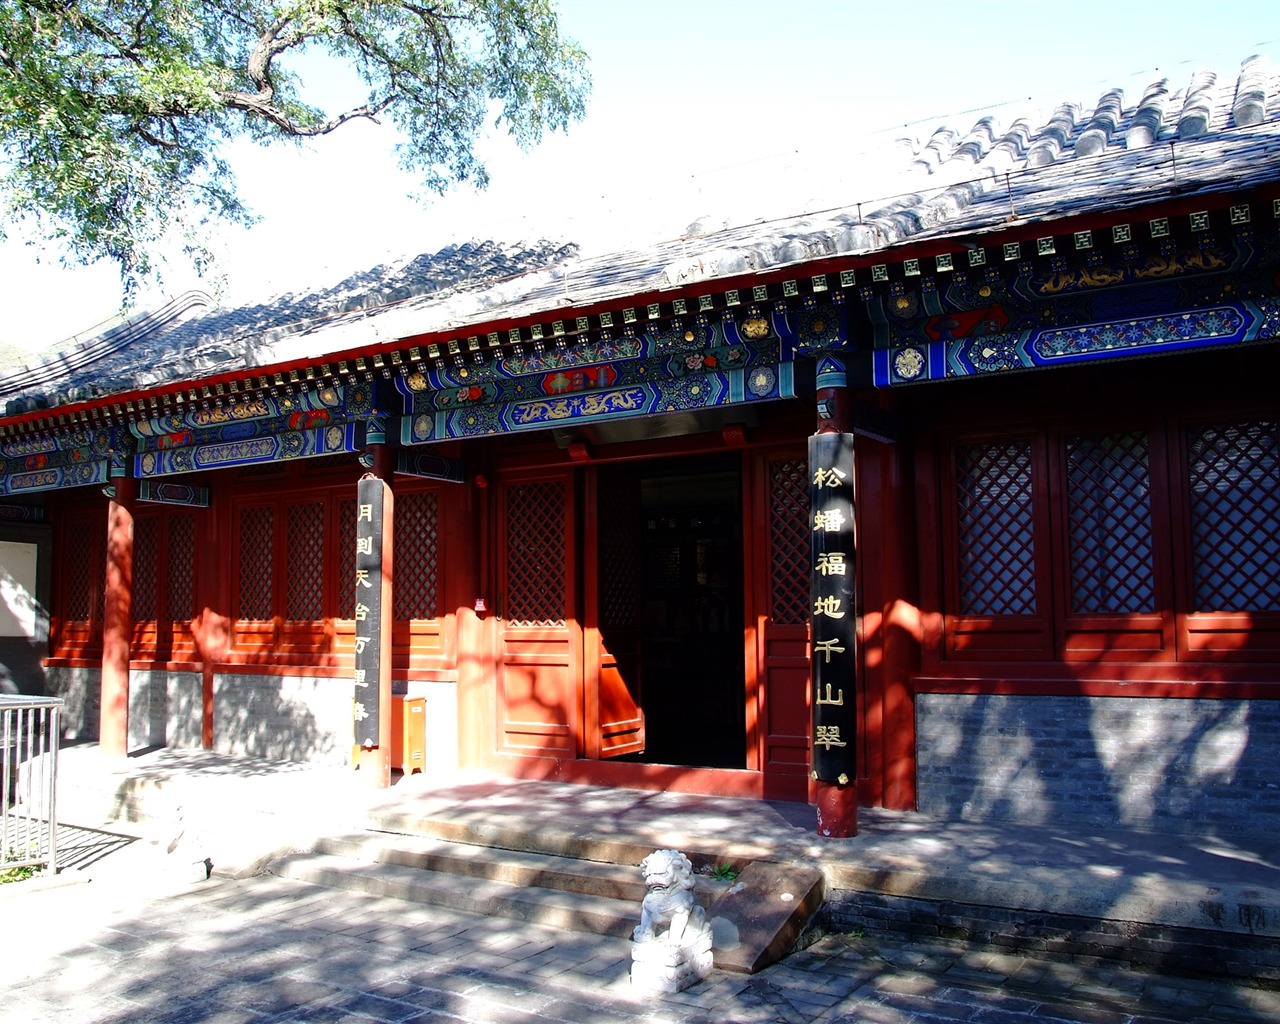 Charity Temple Jingxi monuments (rebar works) #12 - 1280x1024